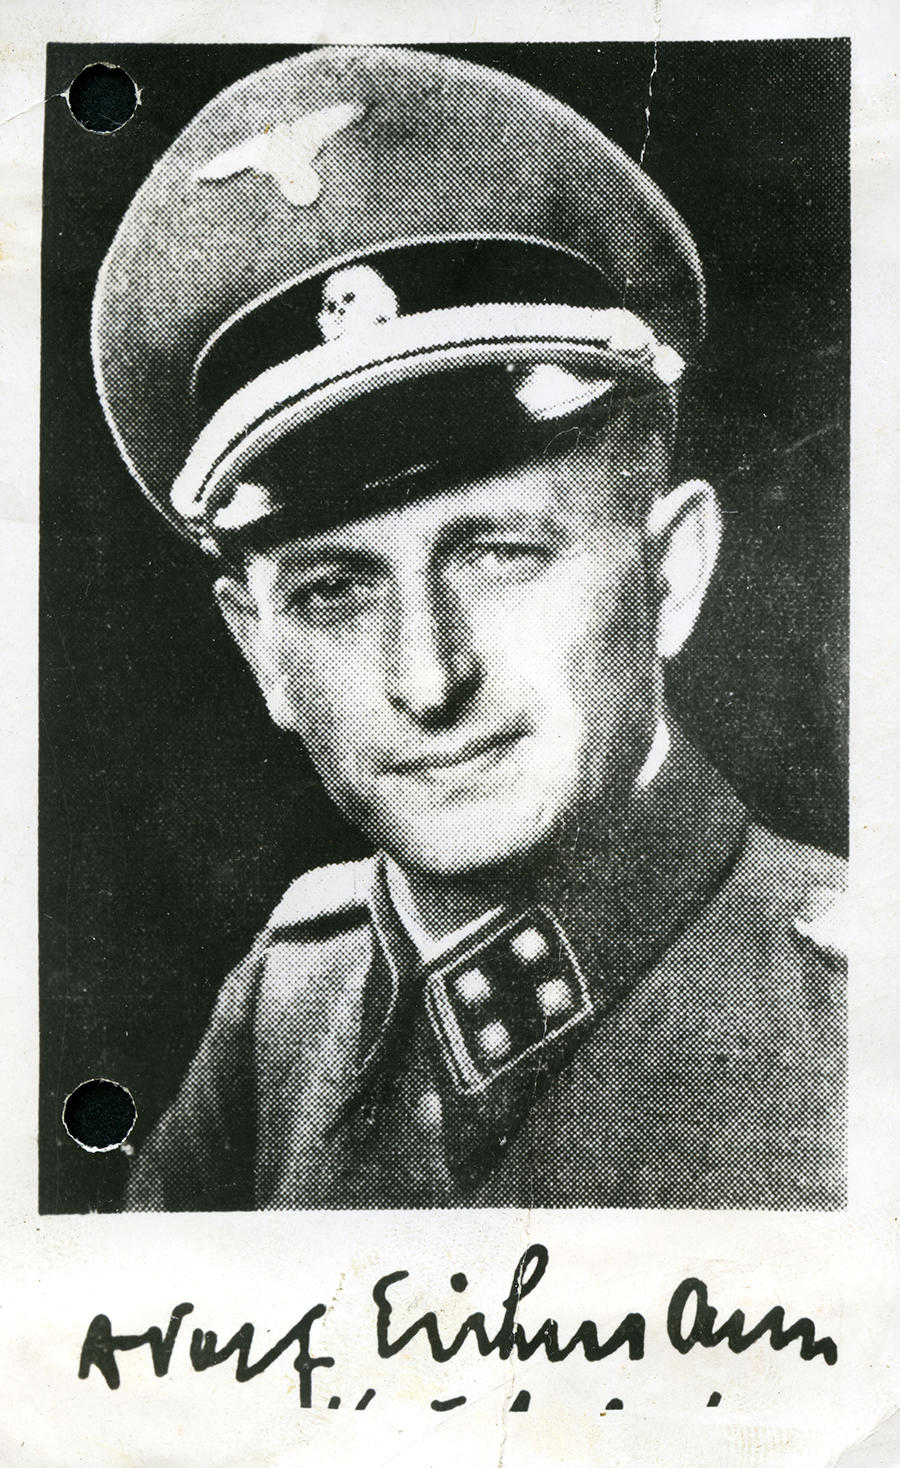 Adolf Eichmann in Nazi uniform, 1940s (Credit: Yad Vashem)